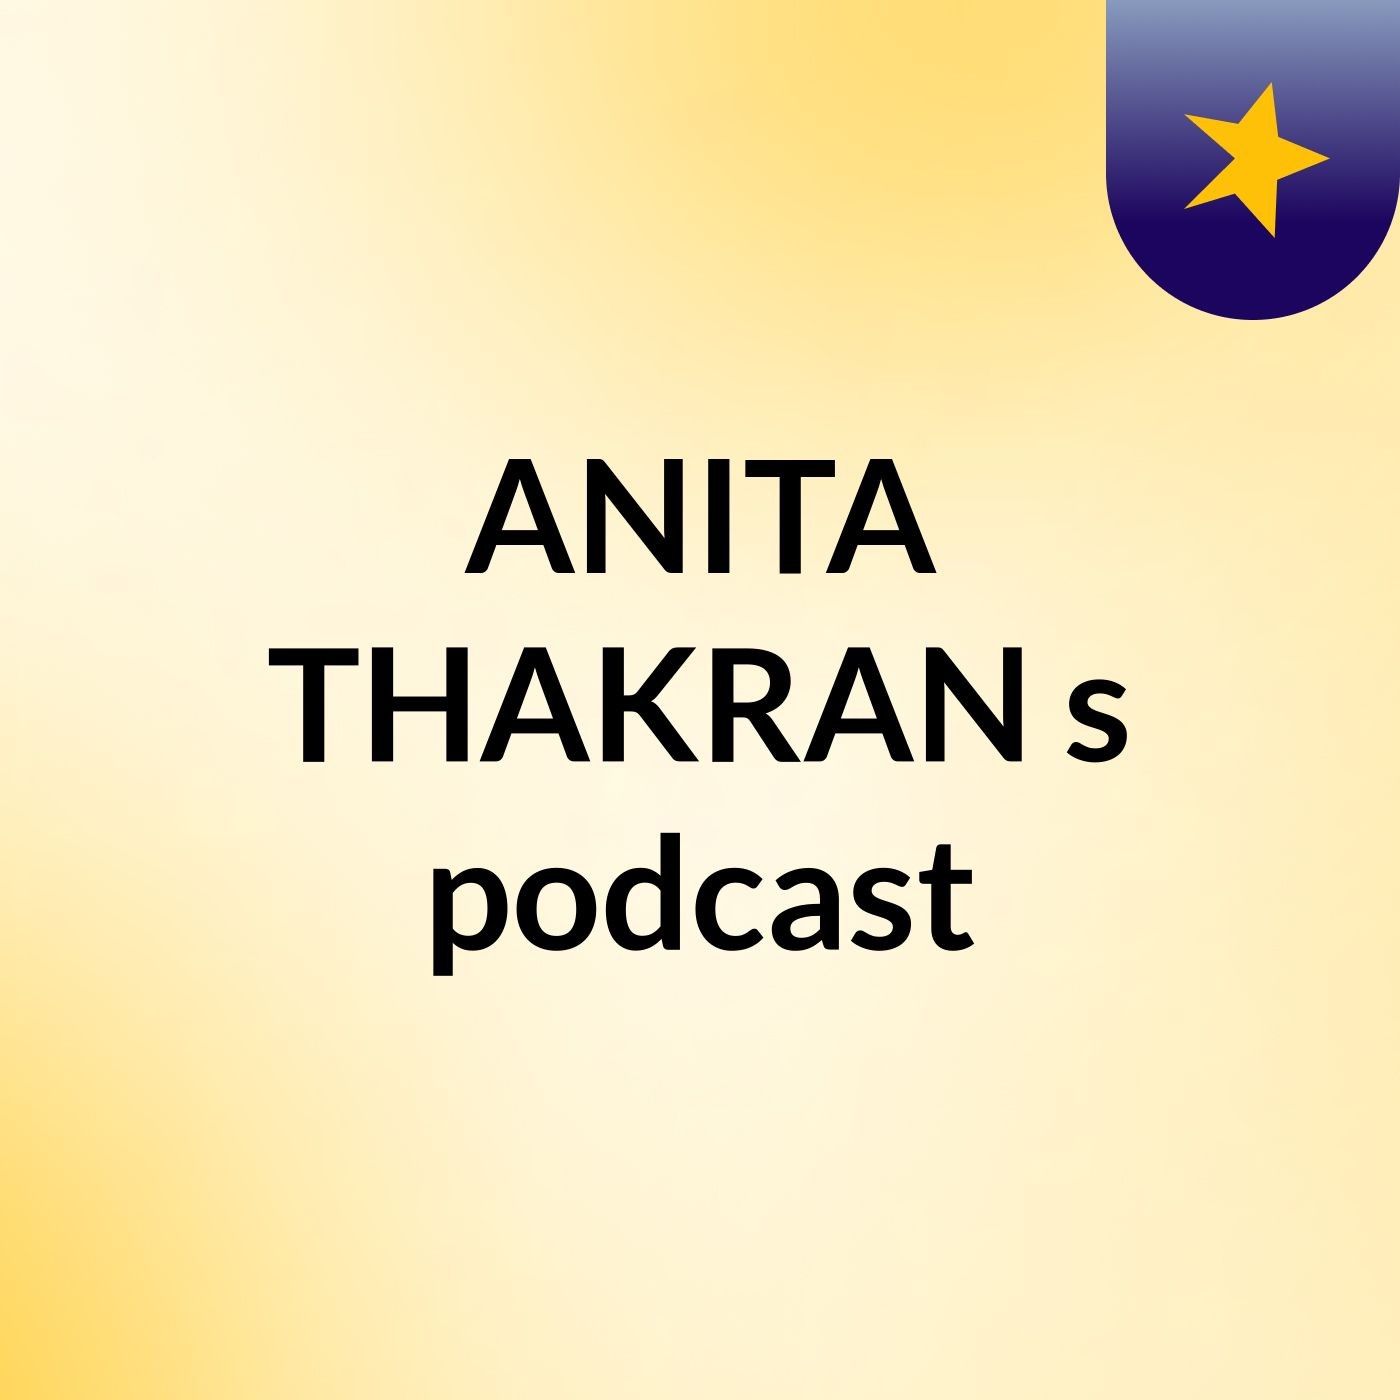 ANITA THAKRAN's podcast